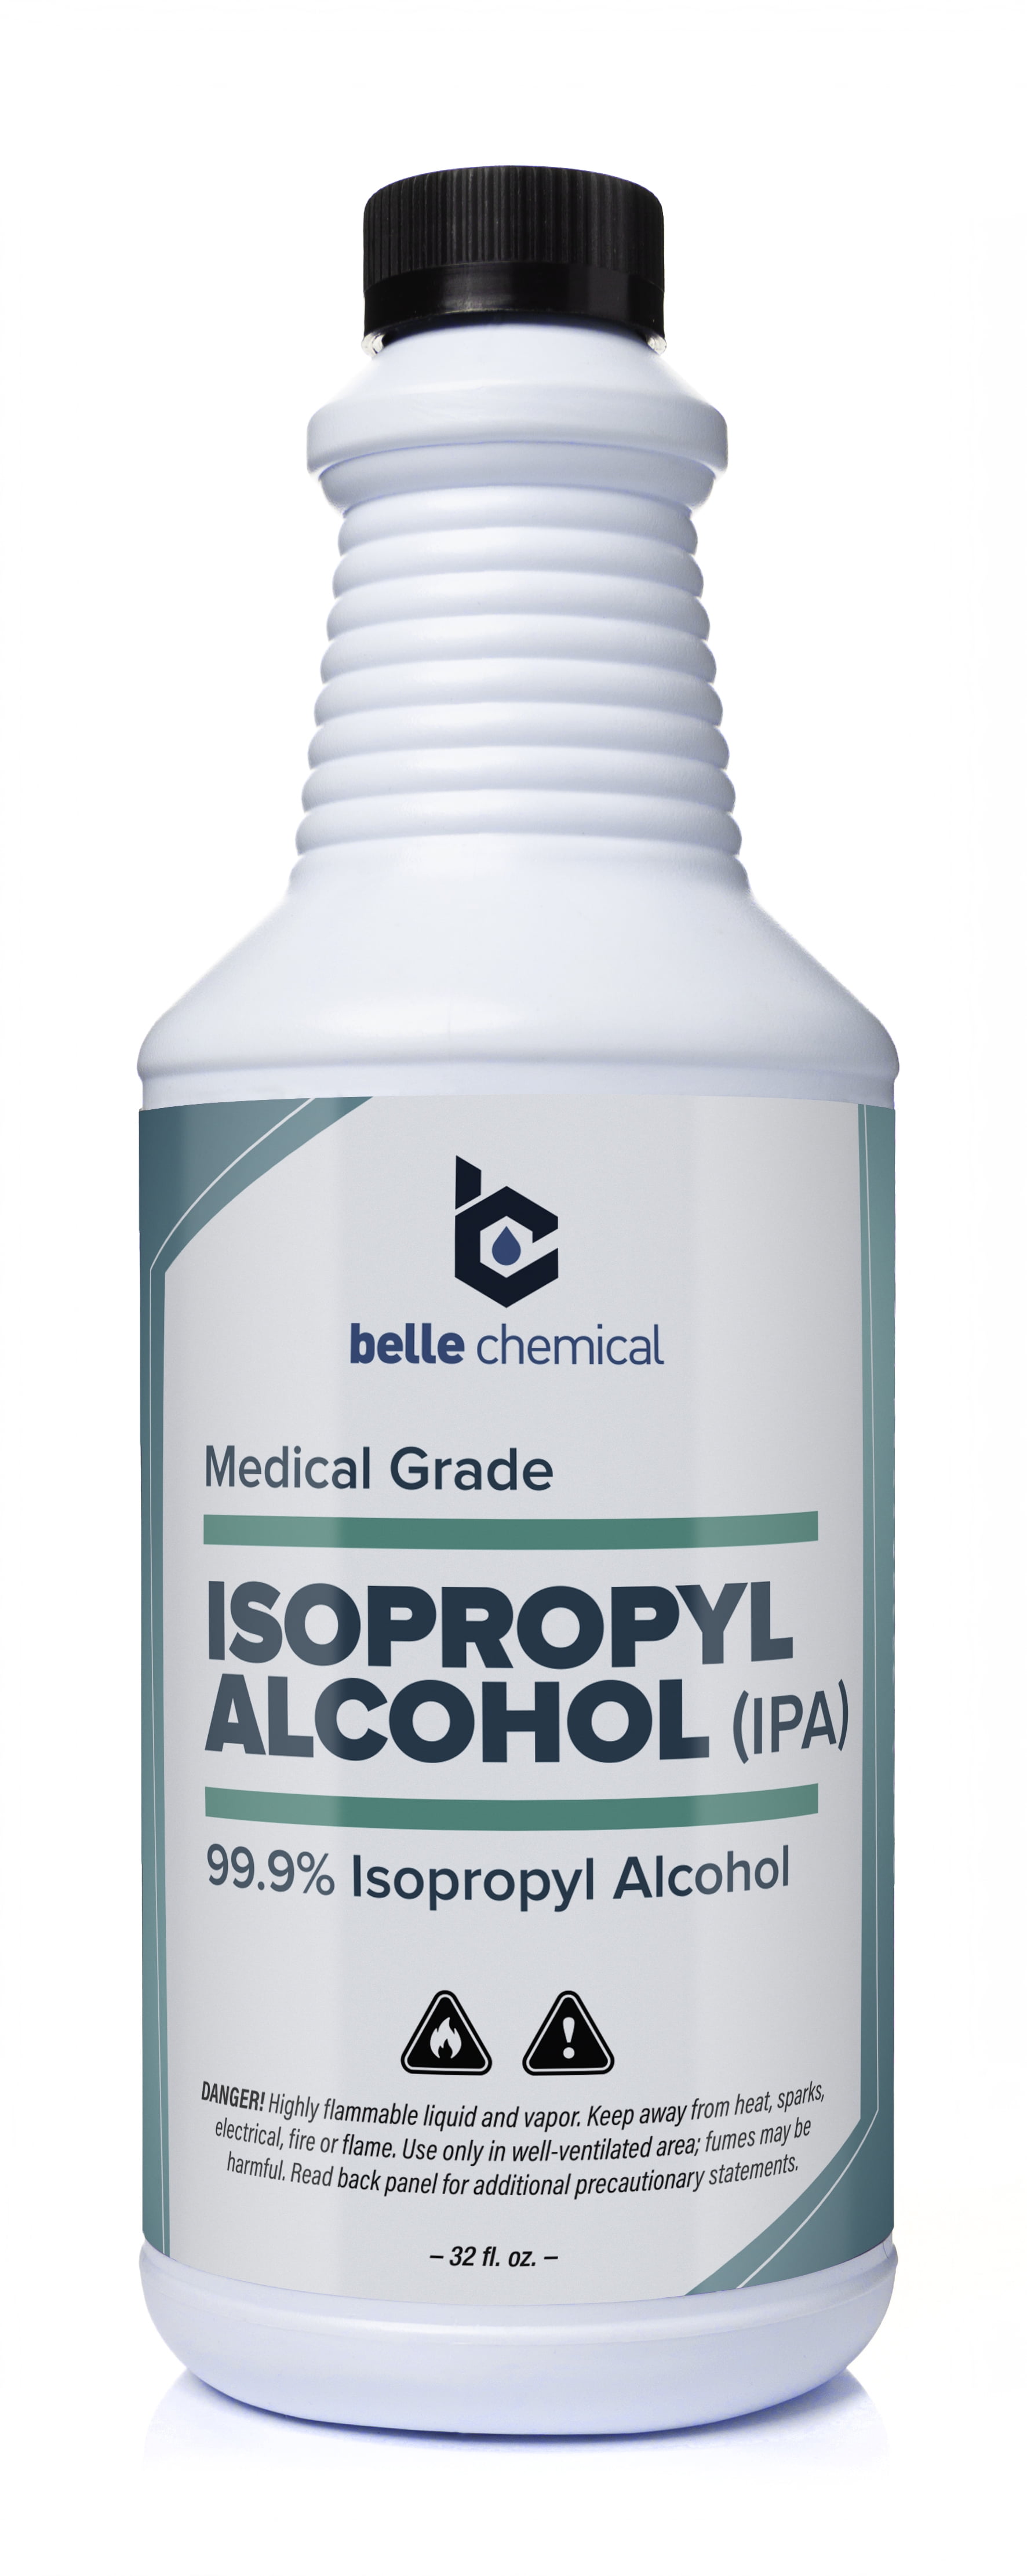 IPA Alcool Isopropylique 99,9% 5L